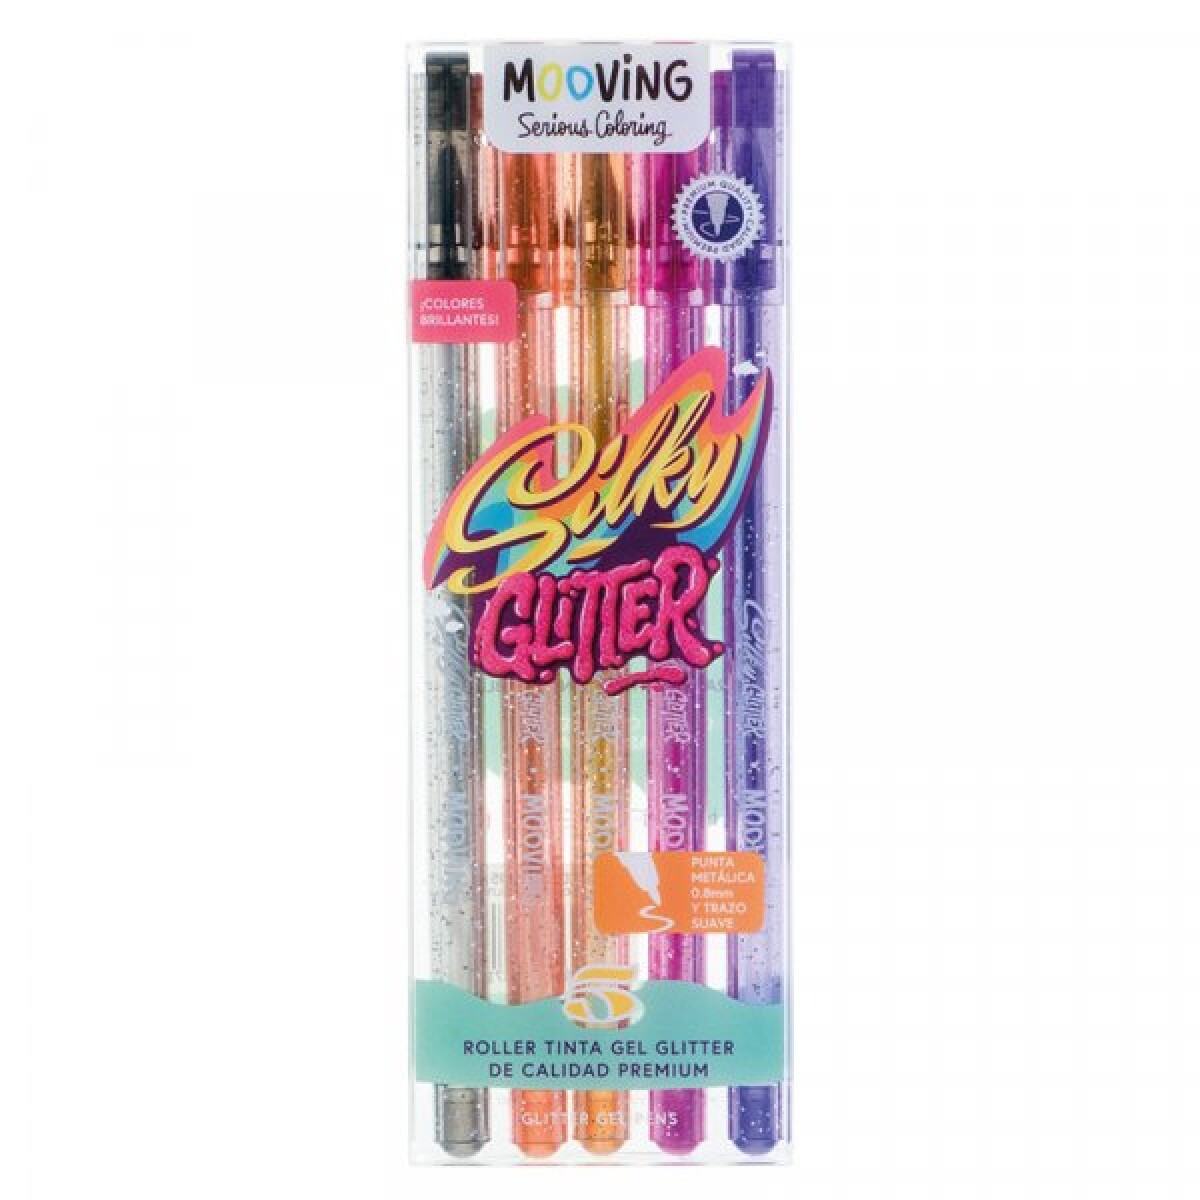 Boligrafo Roller Tinta Gel Glitter Mooving x 5 